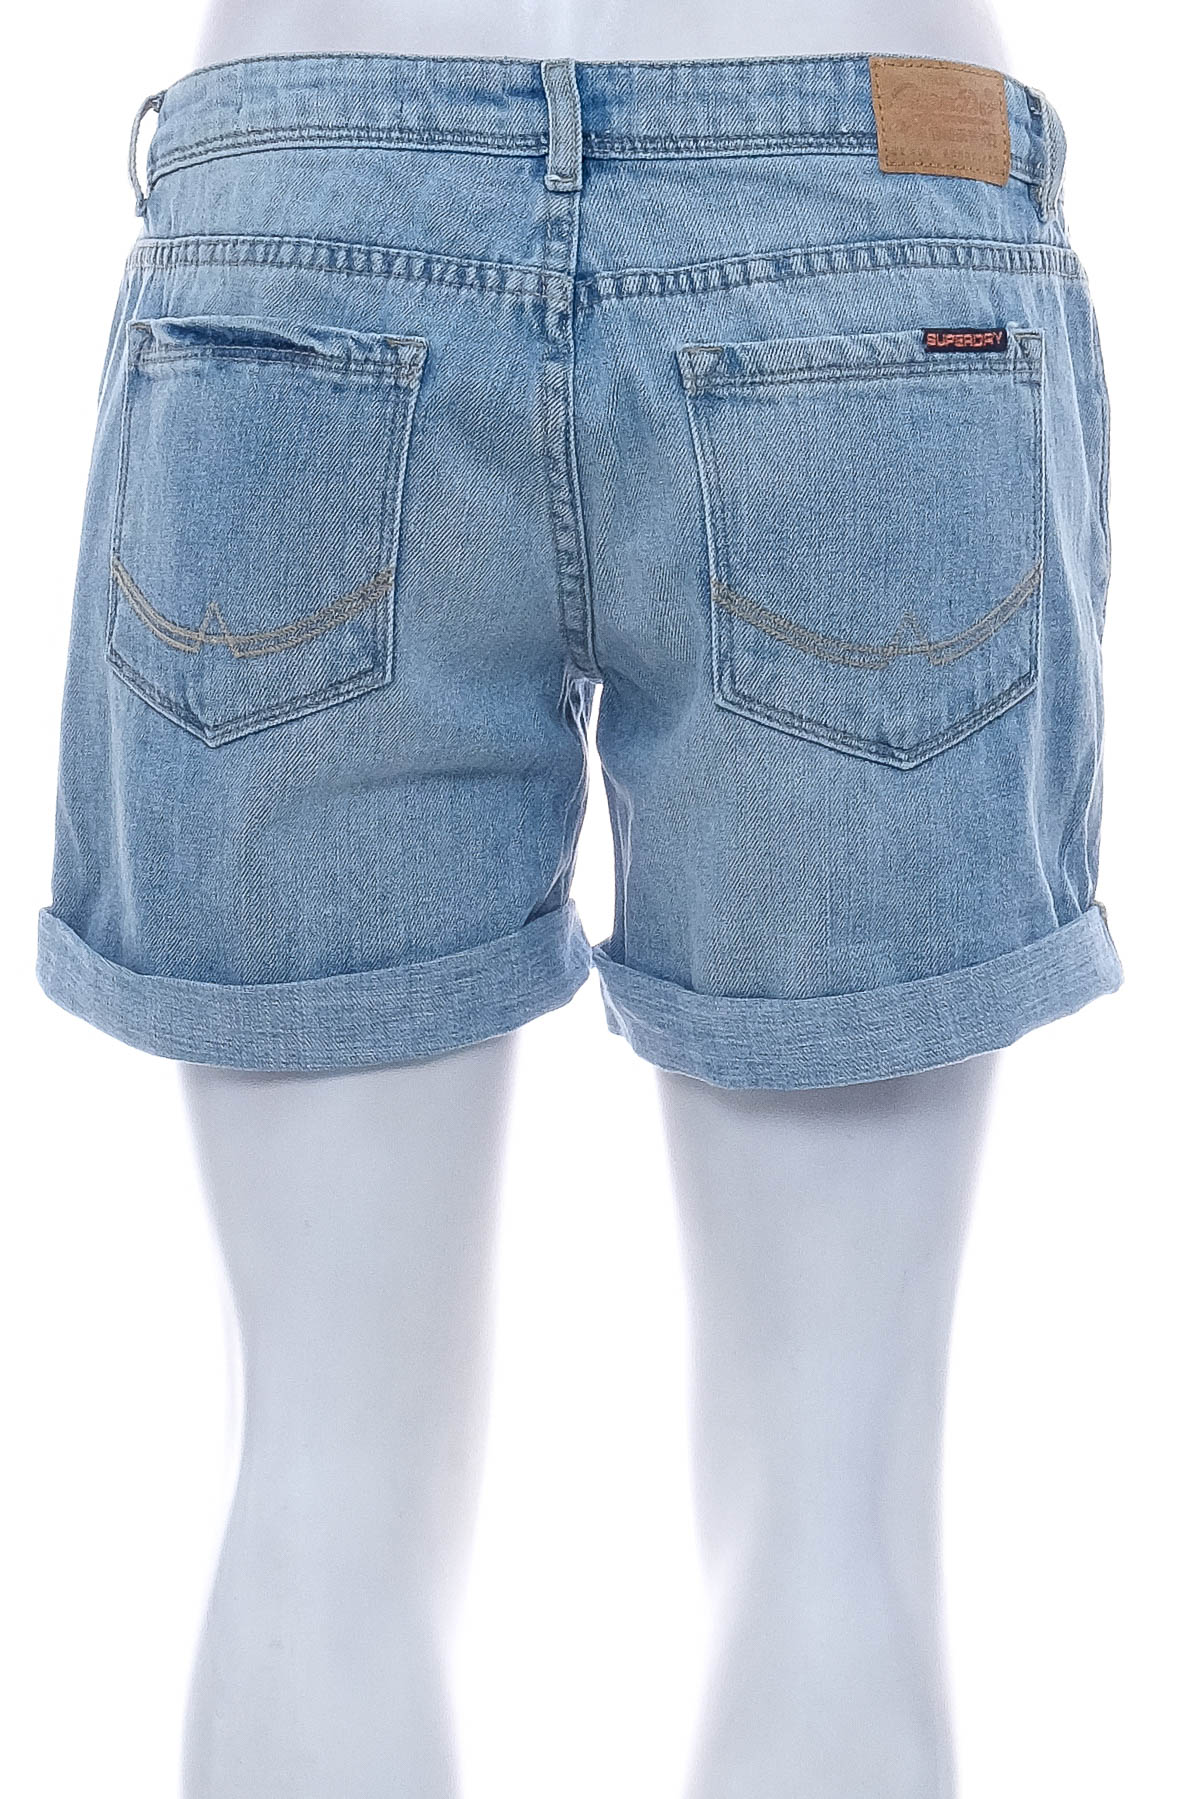 Female shorts - SuperDry - 1